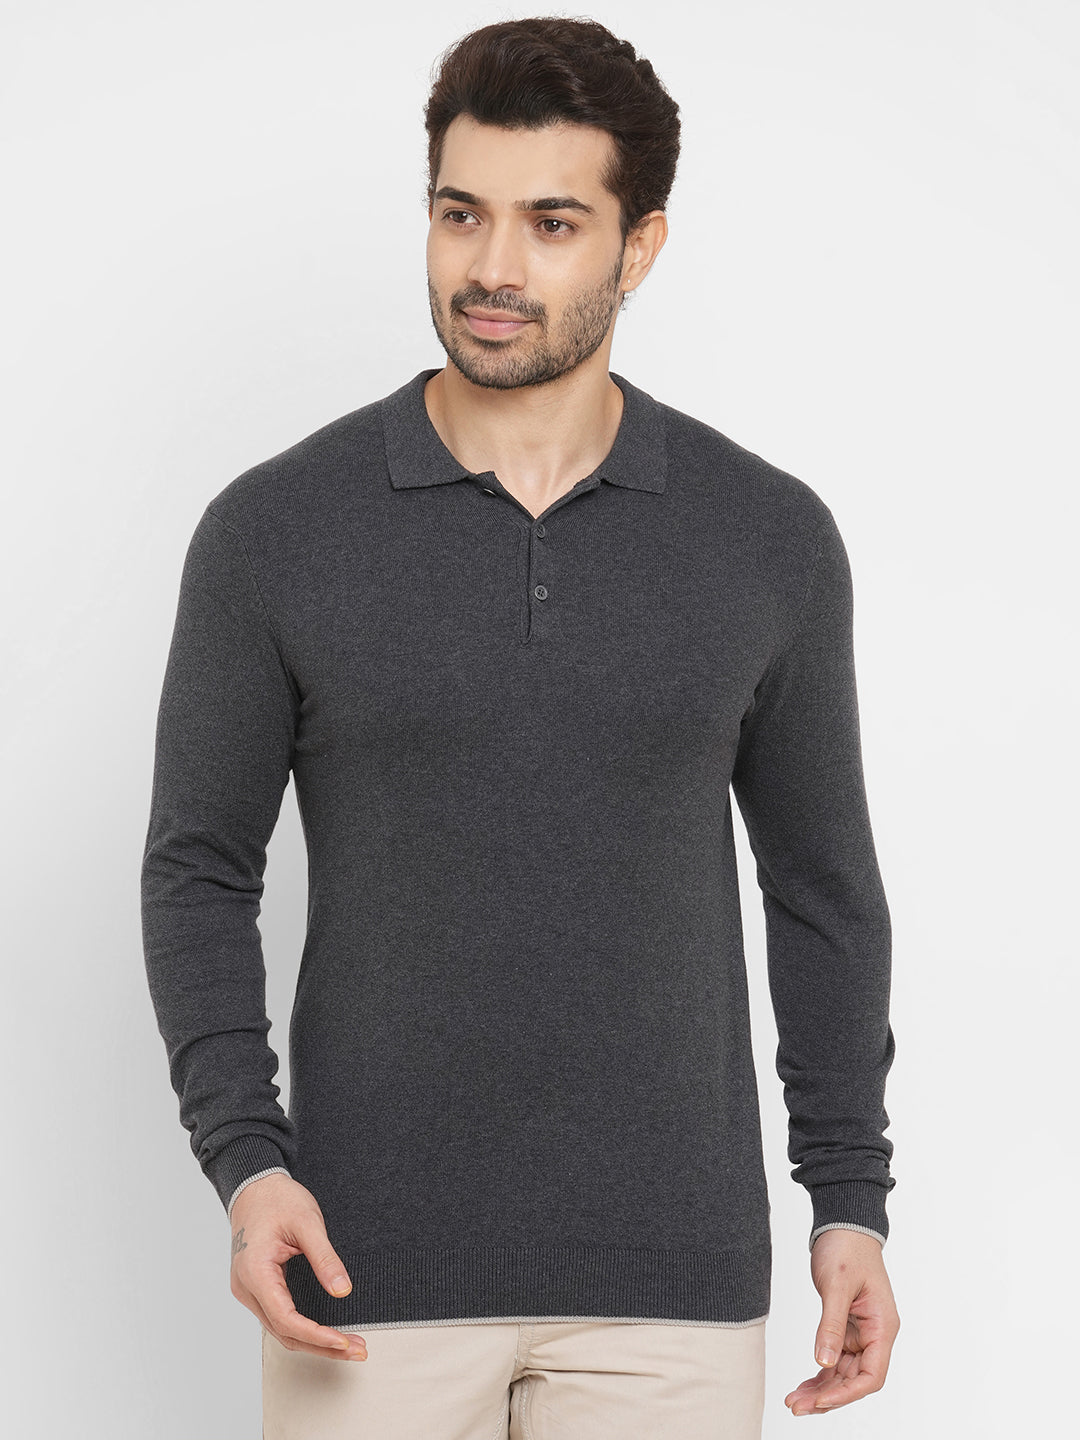 Men's Cotton Blend Charcoal Regular Fit Long Sleeved Tshirt